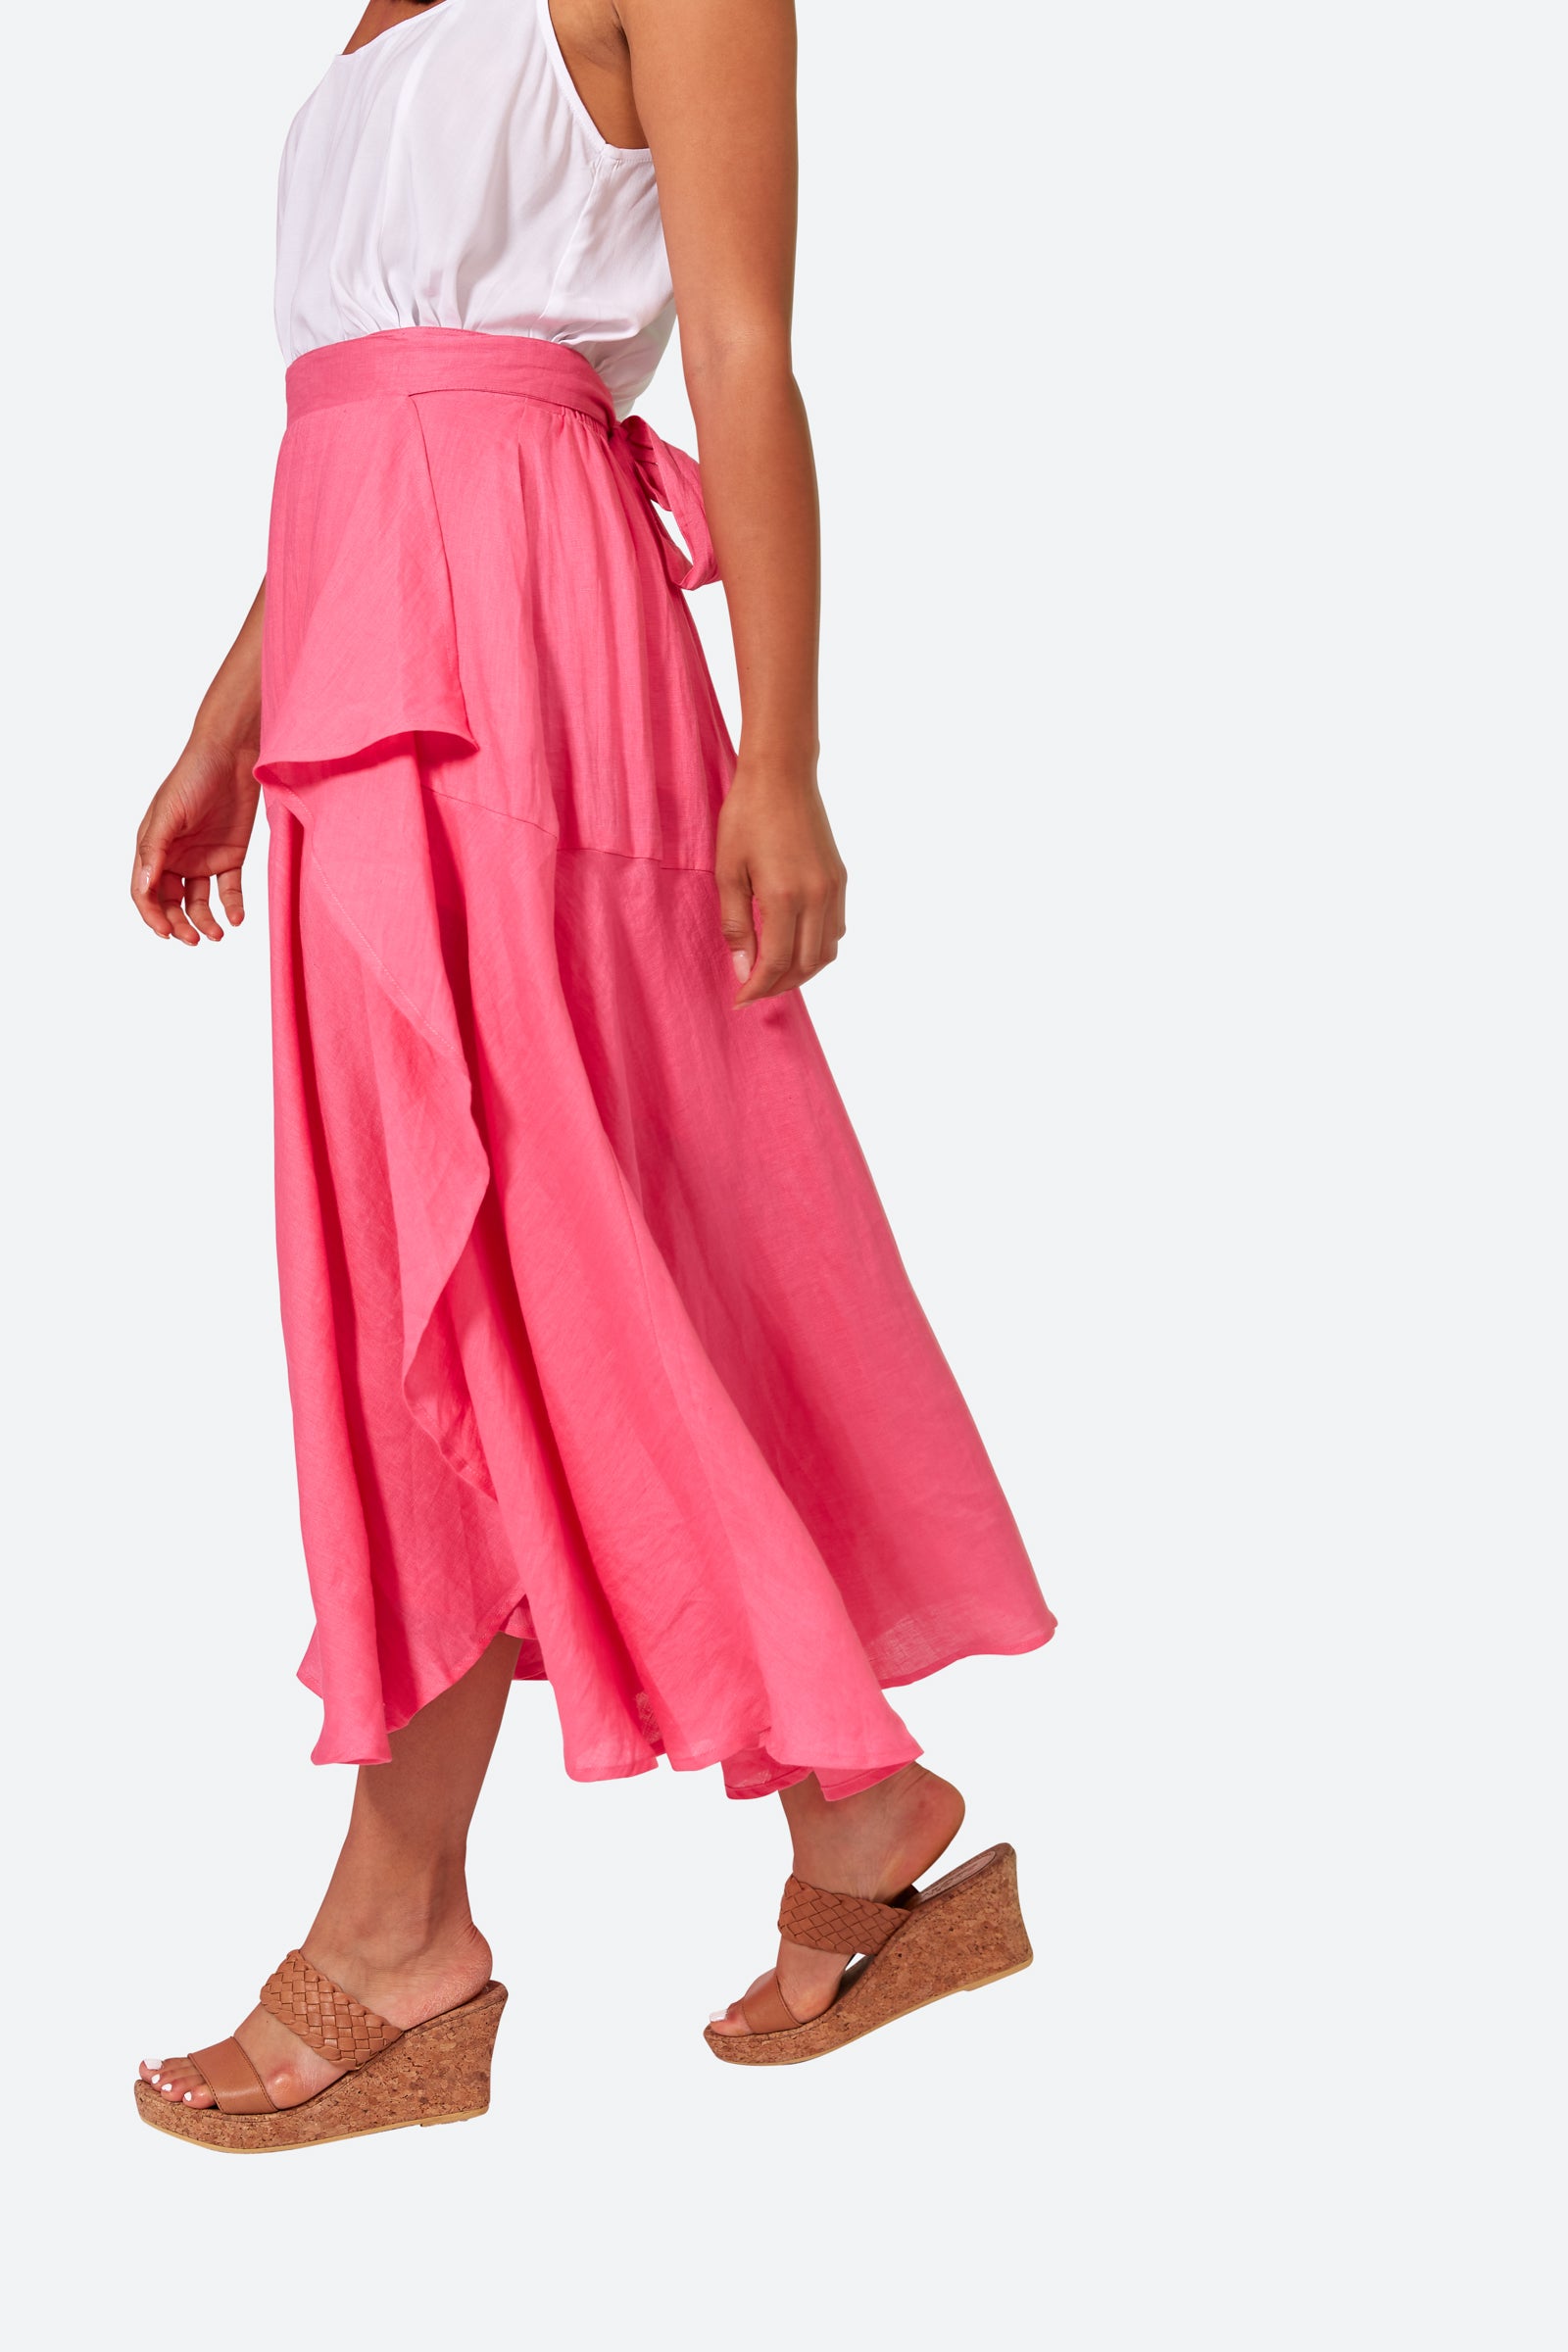 La Vie Wrap Skirt - Candy - eb&ive Clothing - Skirt Mid Linen